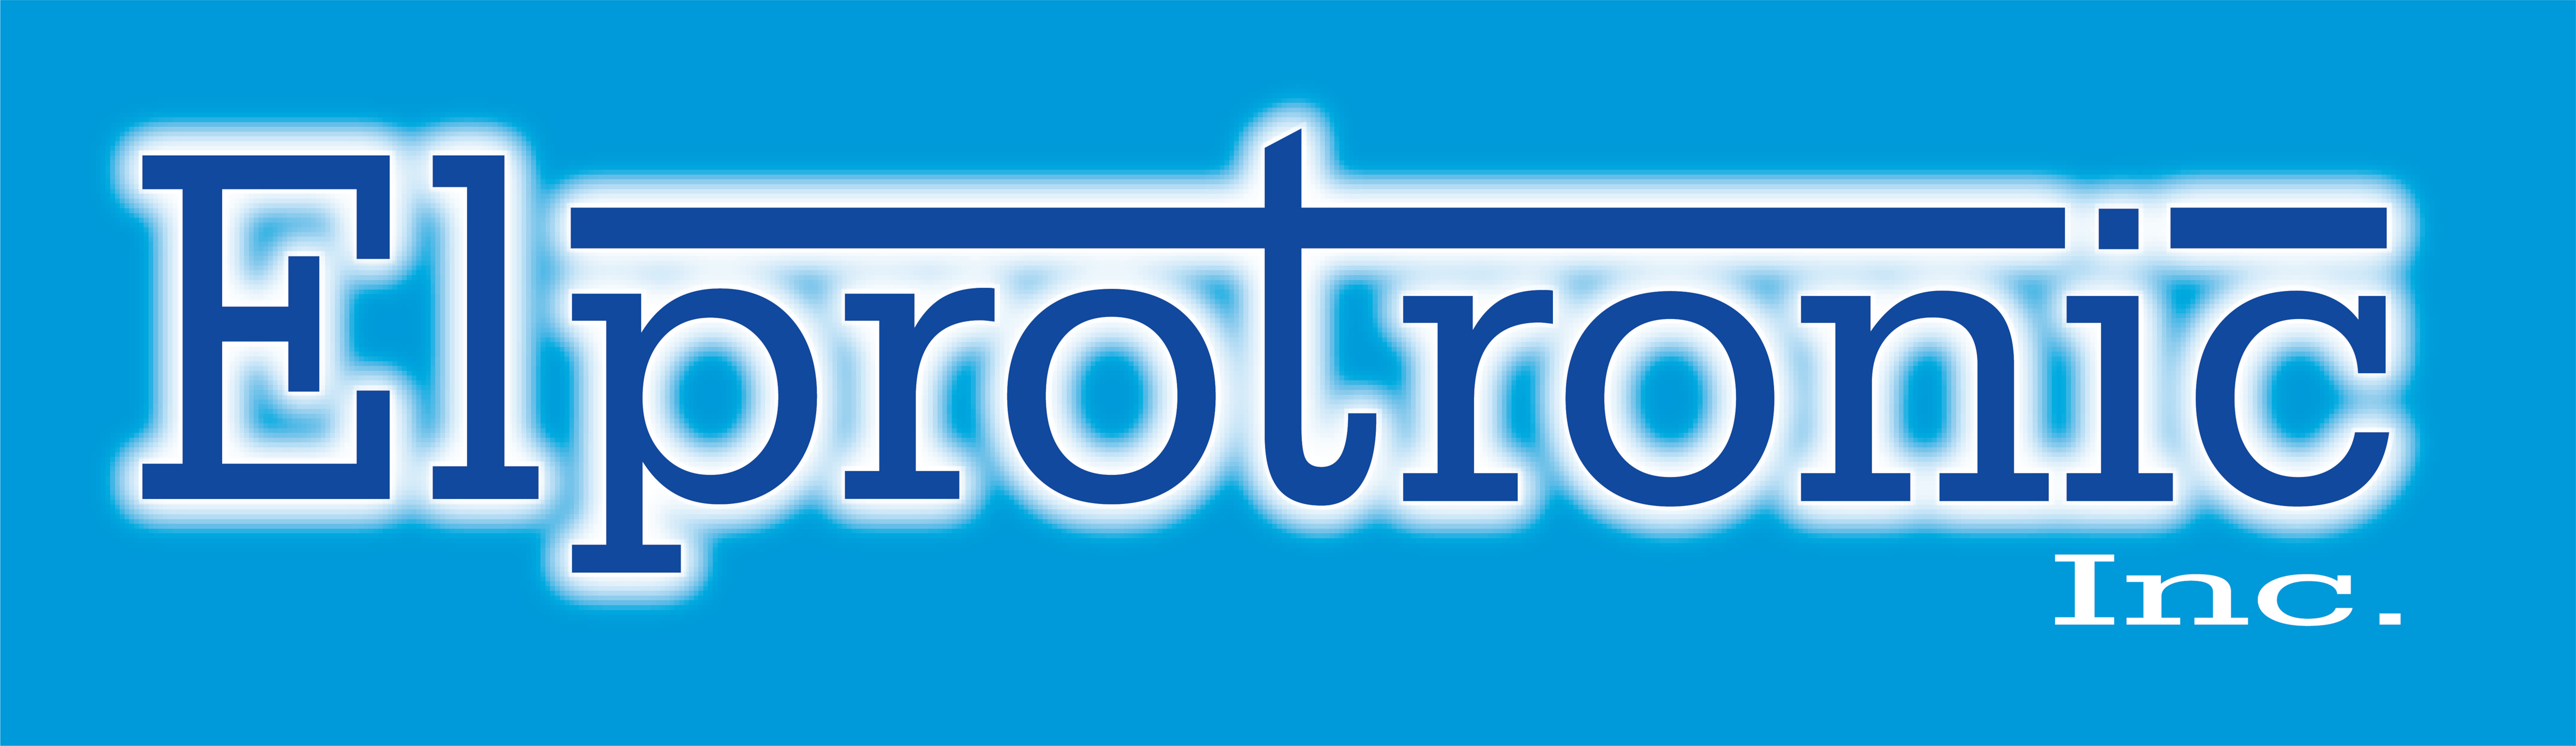 Elprotronic Inc. LOGO